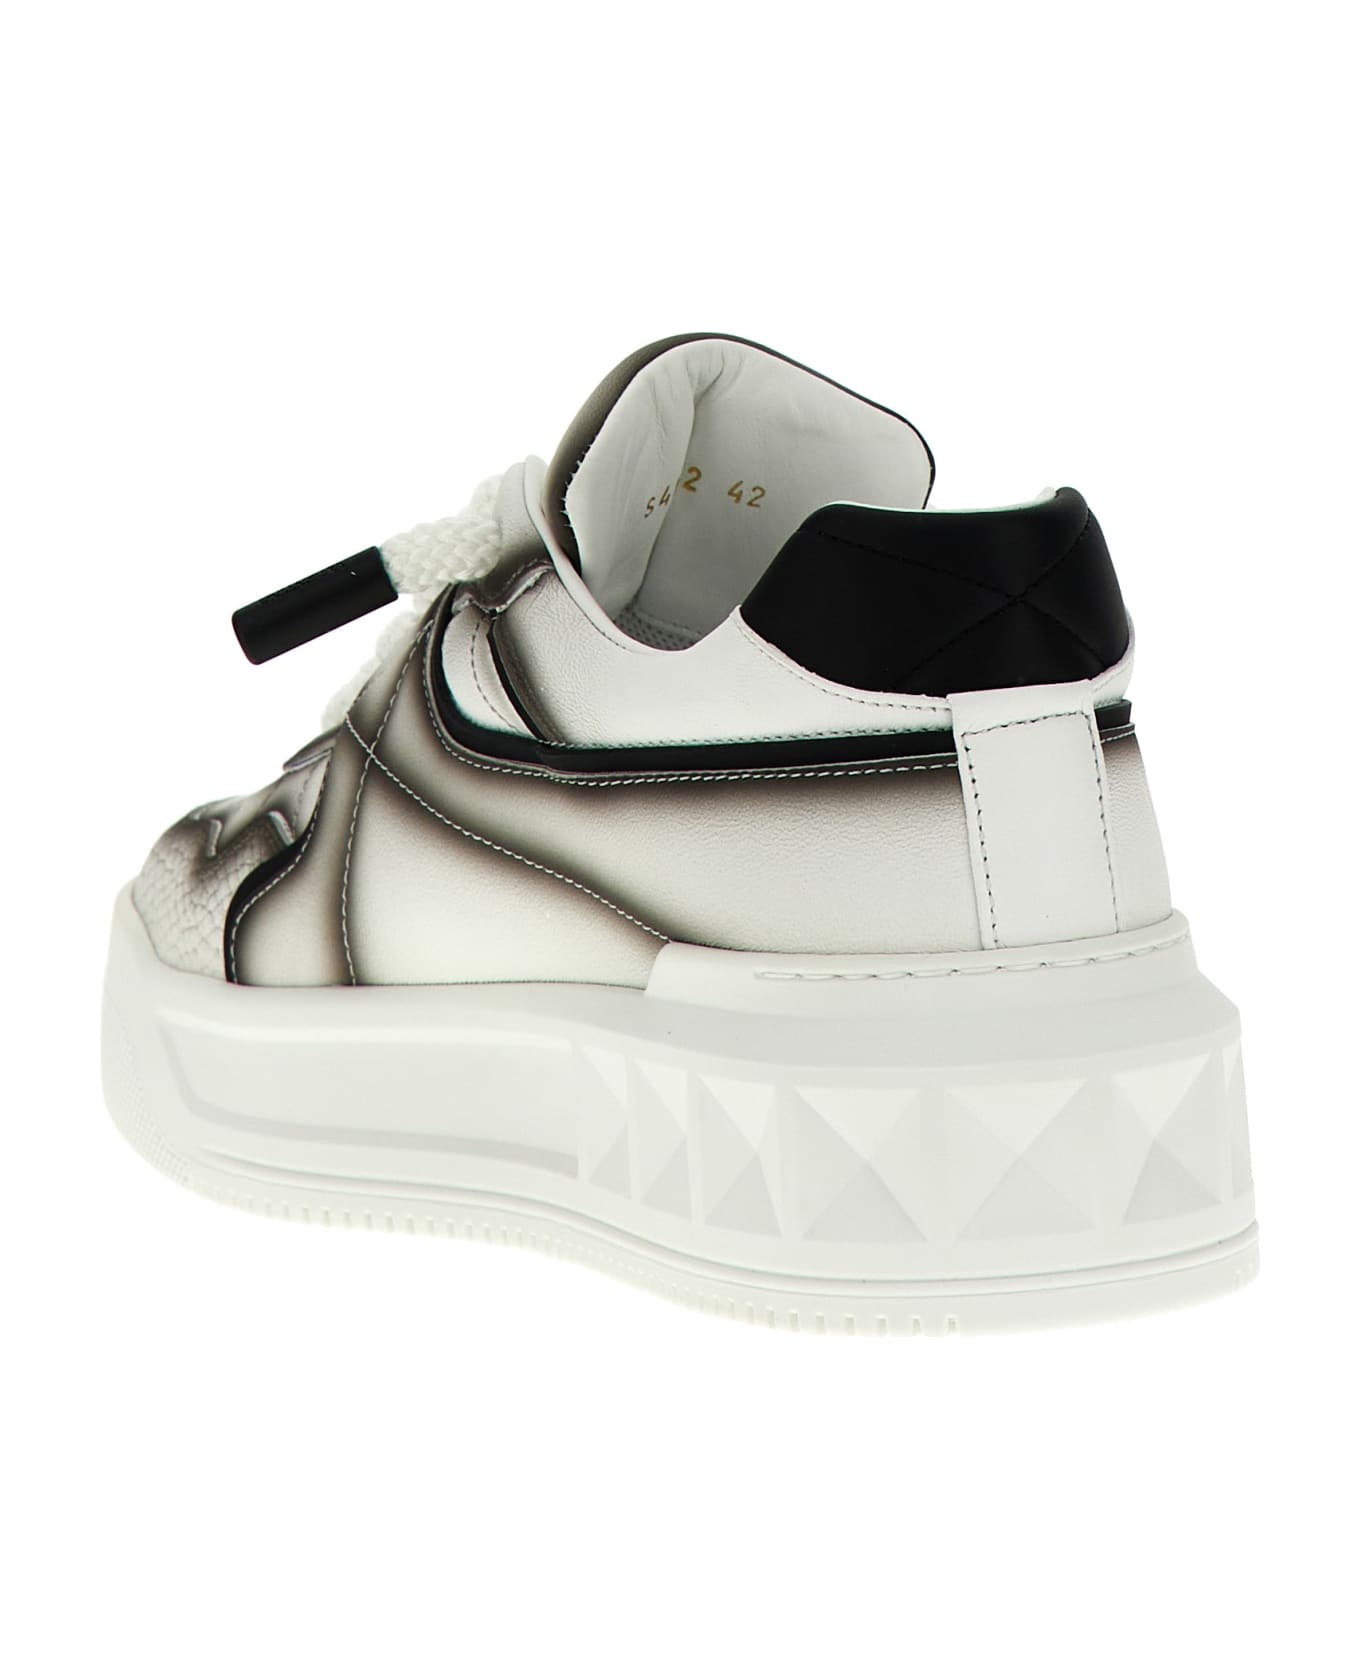 Valentino Garavani 'one Stud Xl' Sneakers - White/Black